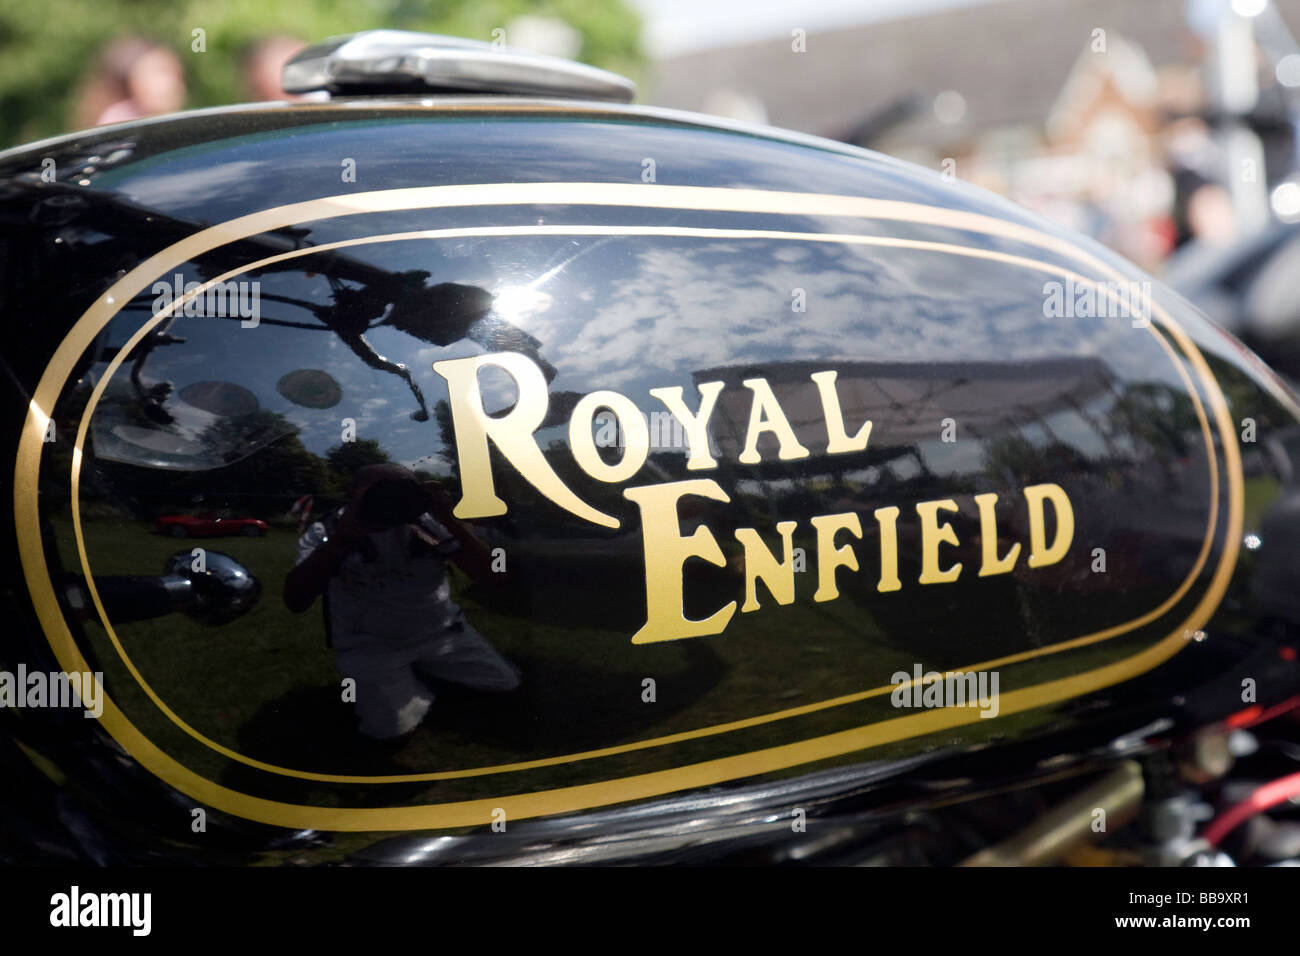 Fuel tank, Royal Enfield motorcycle Stock Photo